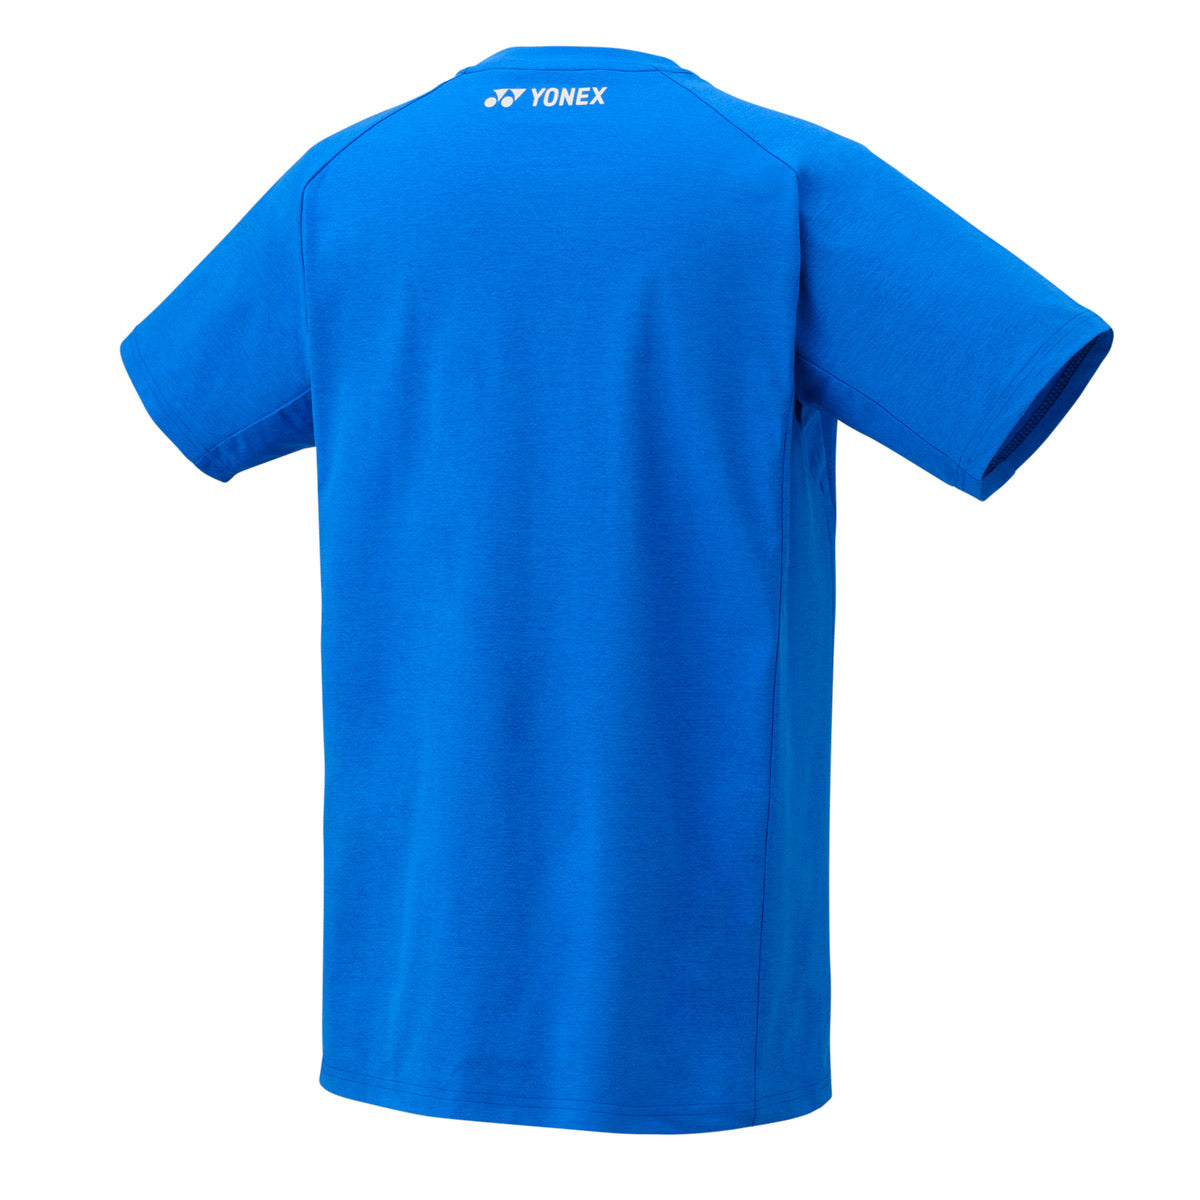 Yonex All-England Badminton Unisex T-Shirt - Electric Blue